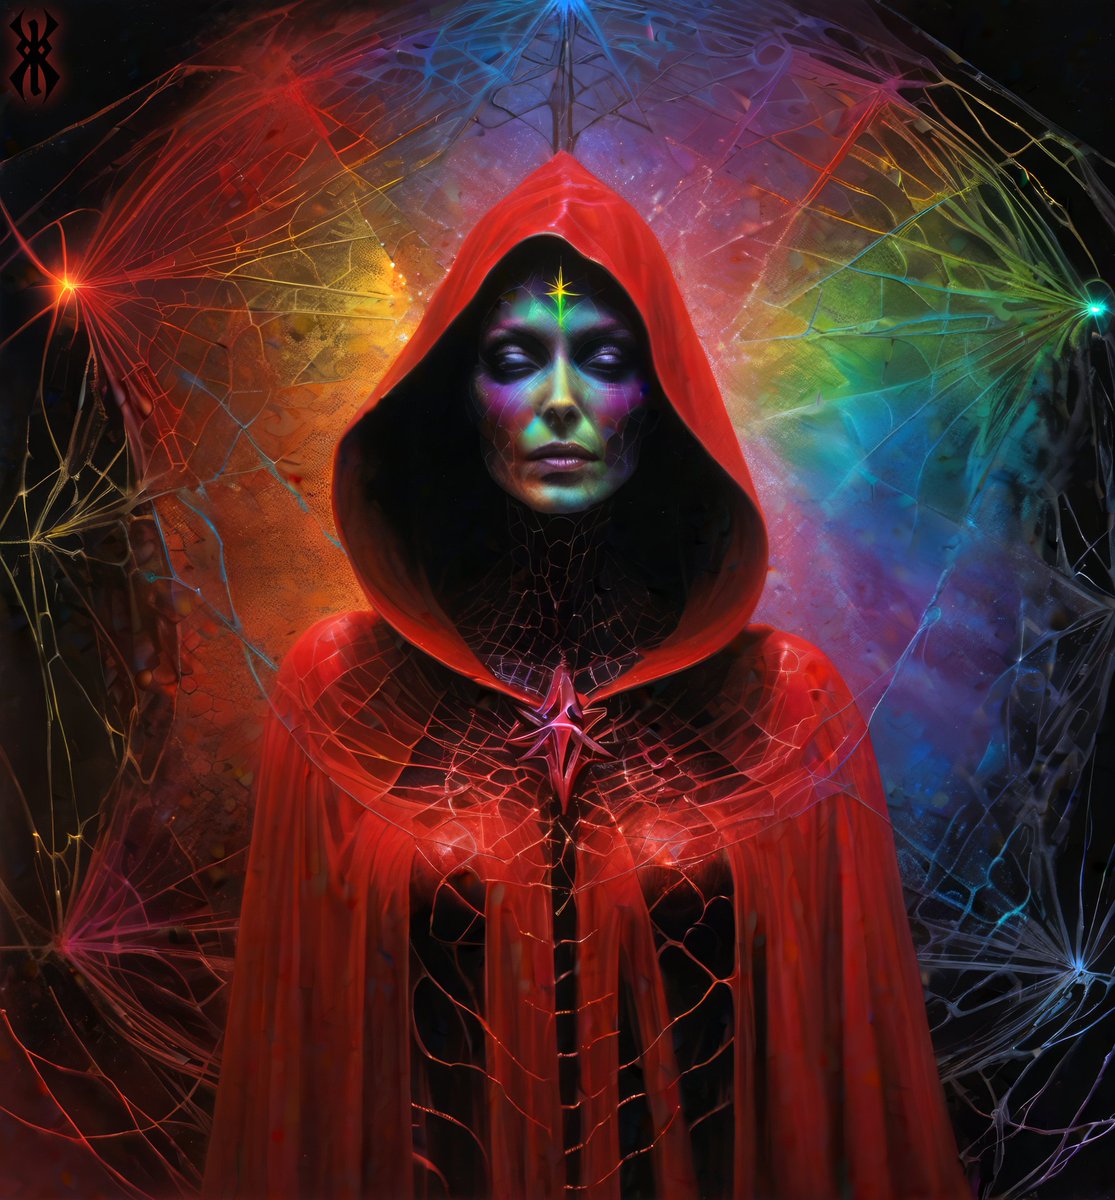 ... cult of the prism ...
#priestess #lovecraft #cosmichorror #surreal_art #eldritchhorror #surrealism #alien #death #surreal #horrorart #arts #art #artist #gothic #psychedlic #occult #occultart #witches #witch #magick #chaosmagick #cult #digitalart #sdxl #photoshop #sdxl #horror